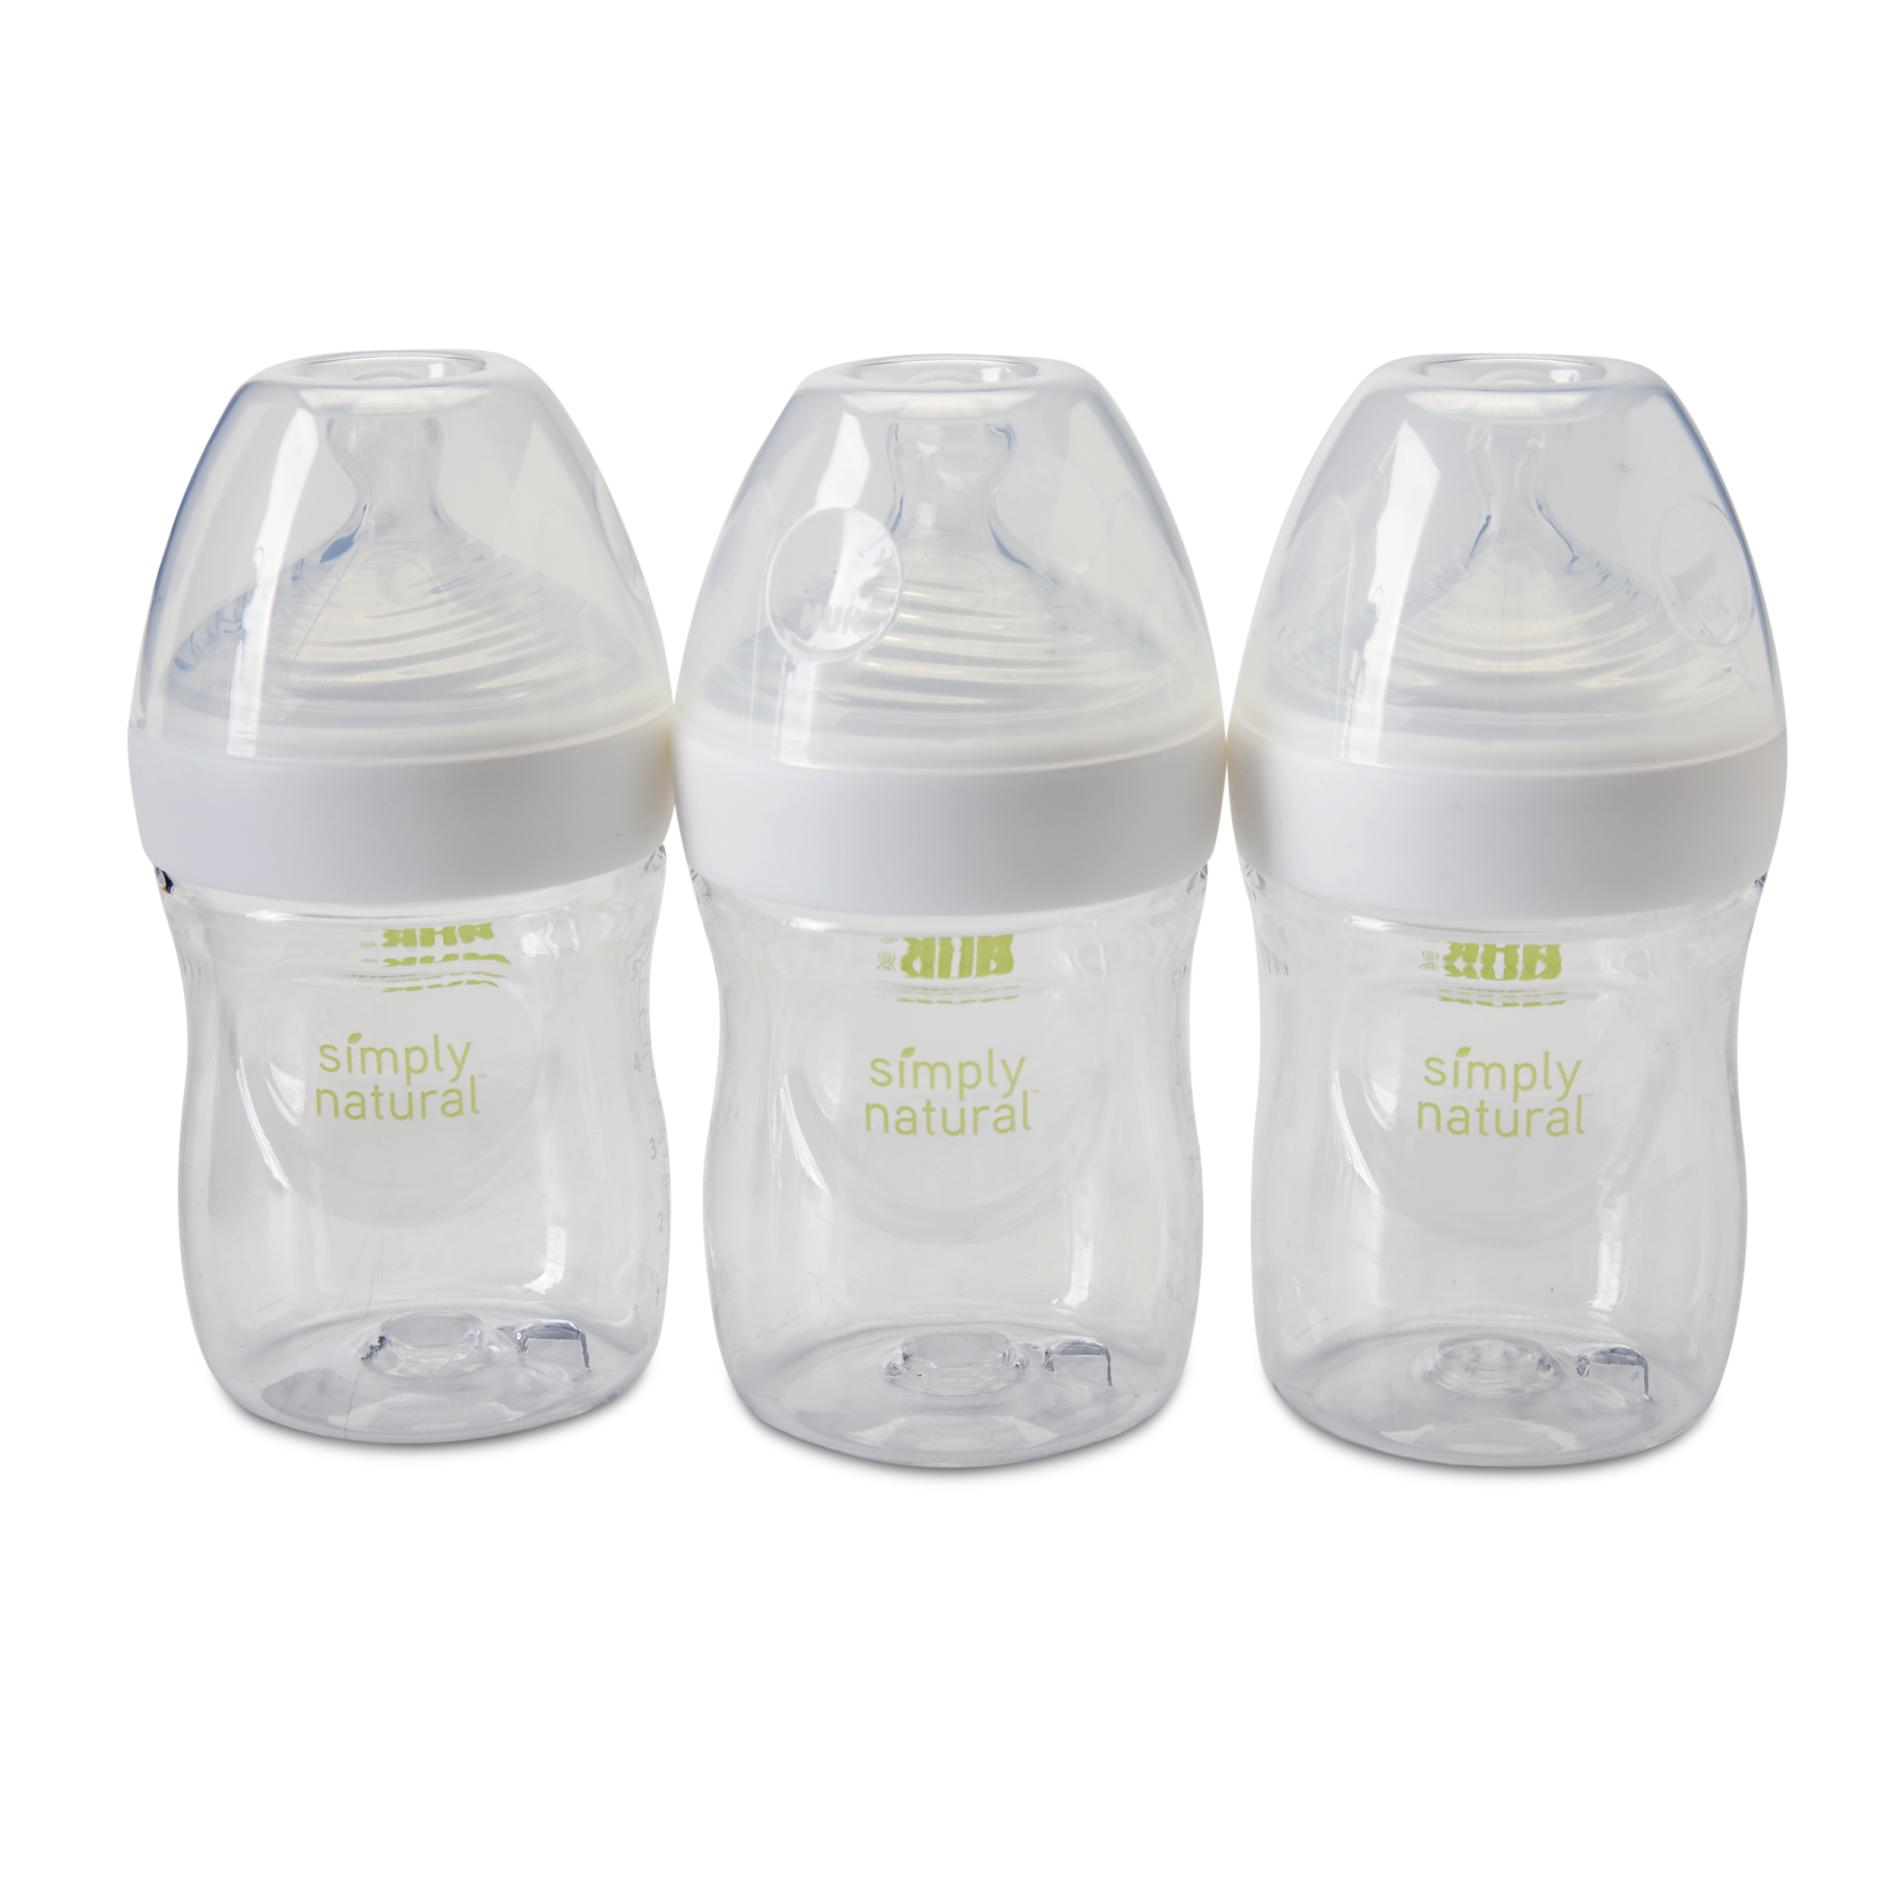 Nuk Infants' 3-Pack Slow Flow Bottle